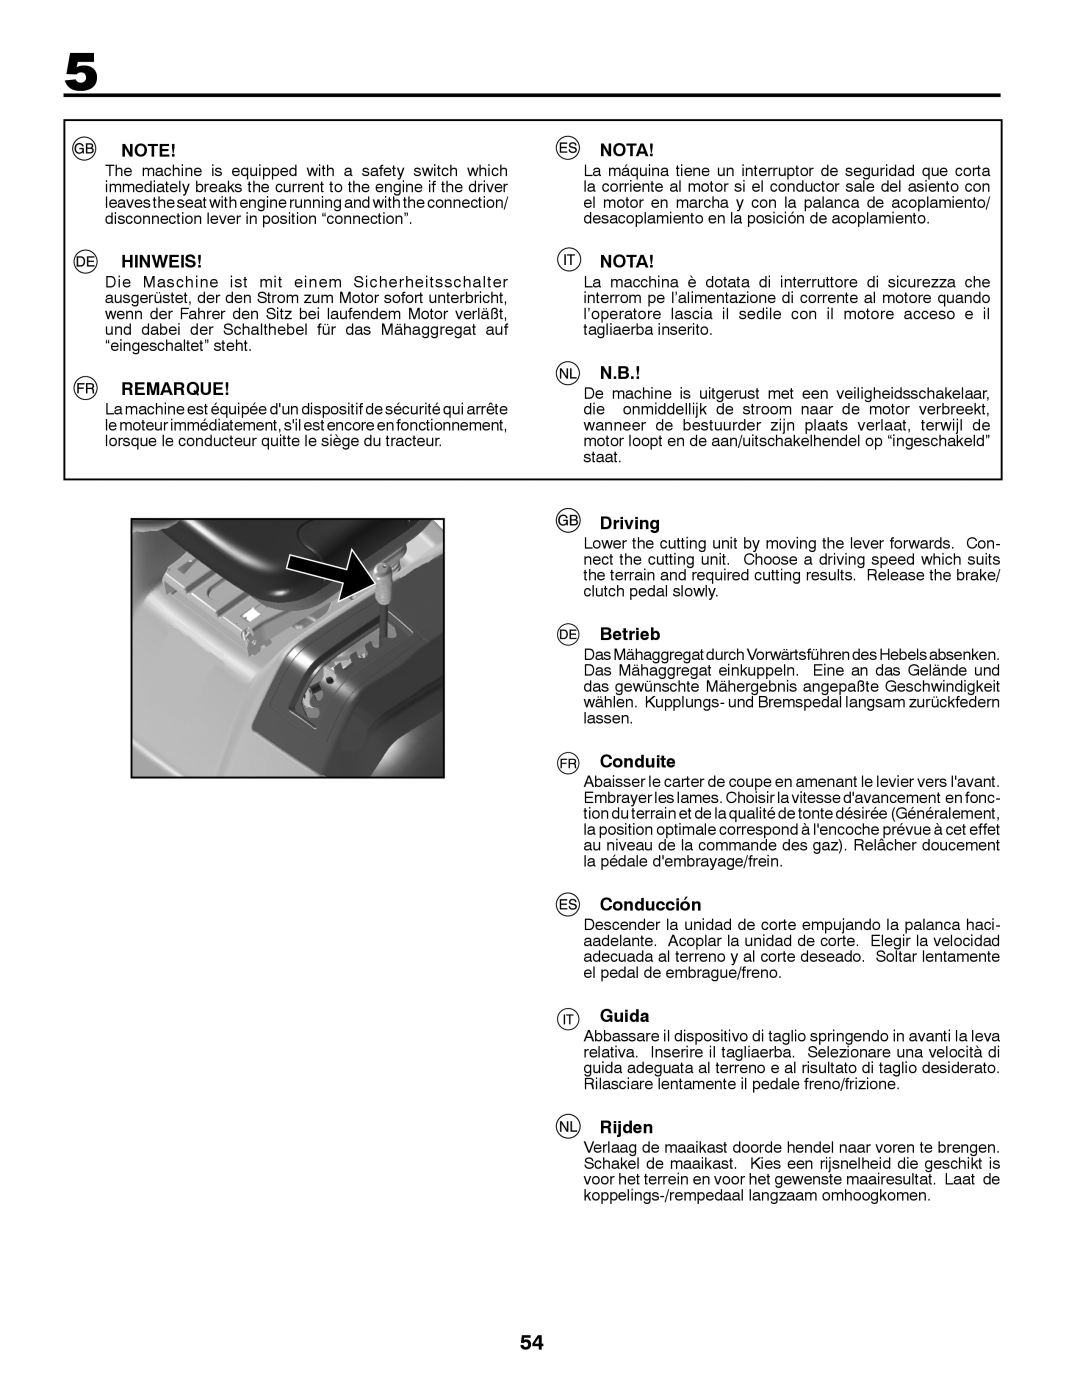 Jonsered LT2213C instruction manual Hinweis, Remarque, Nota, Driving, Betrieb, Conduite, Conducción, Guida, Rijden 